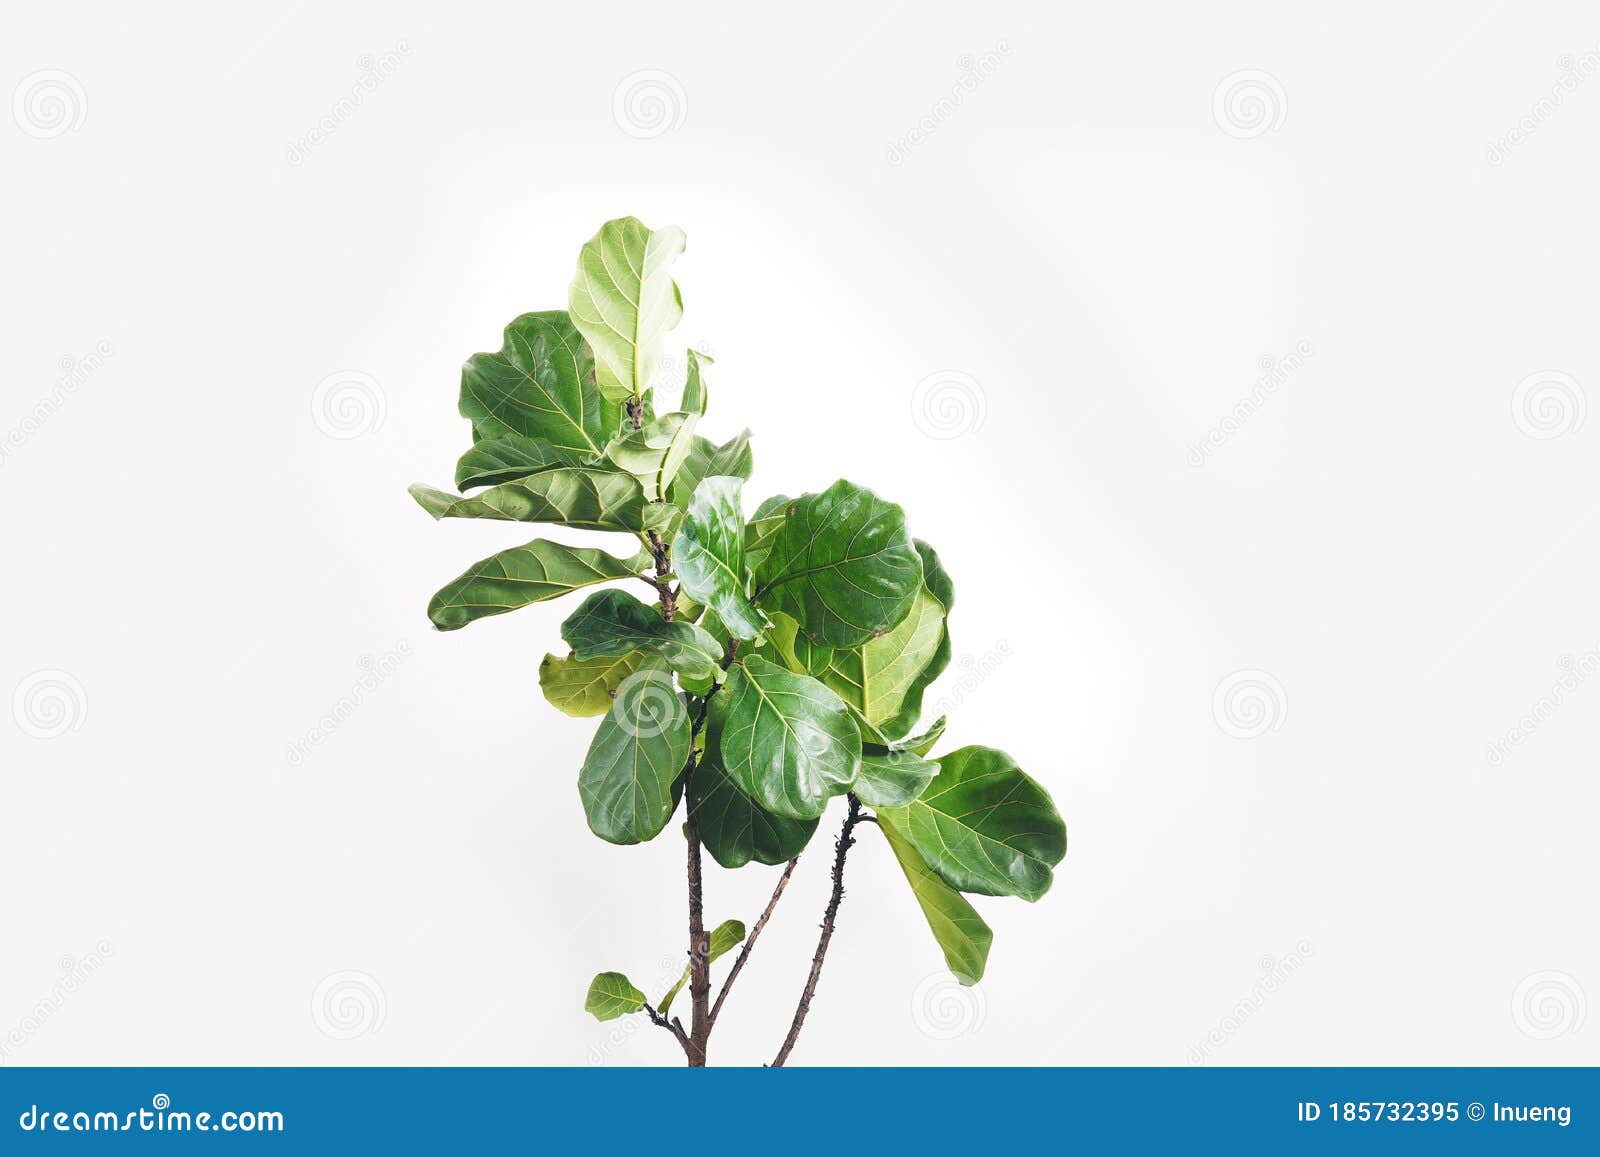 green leaves of fiddle-leaf fig tree ficus lyrata. fiddle leaf fig tree on white background.